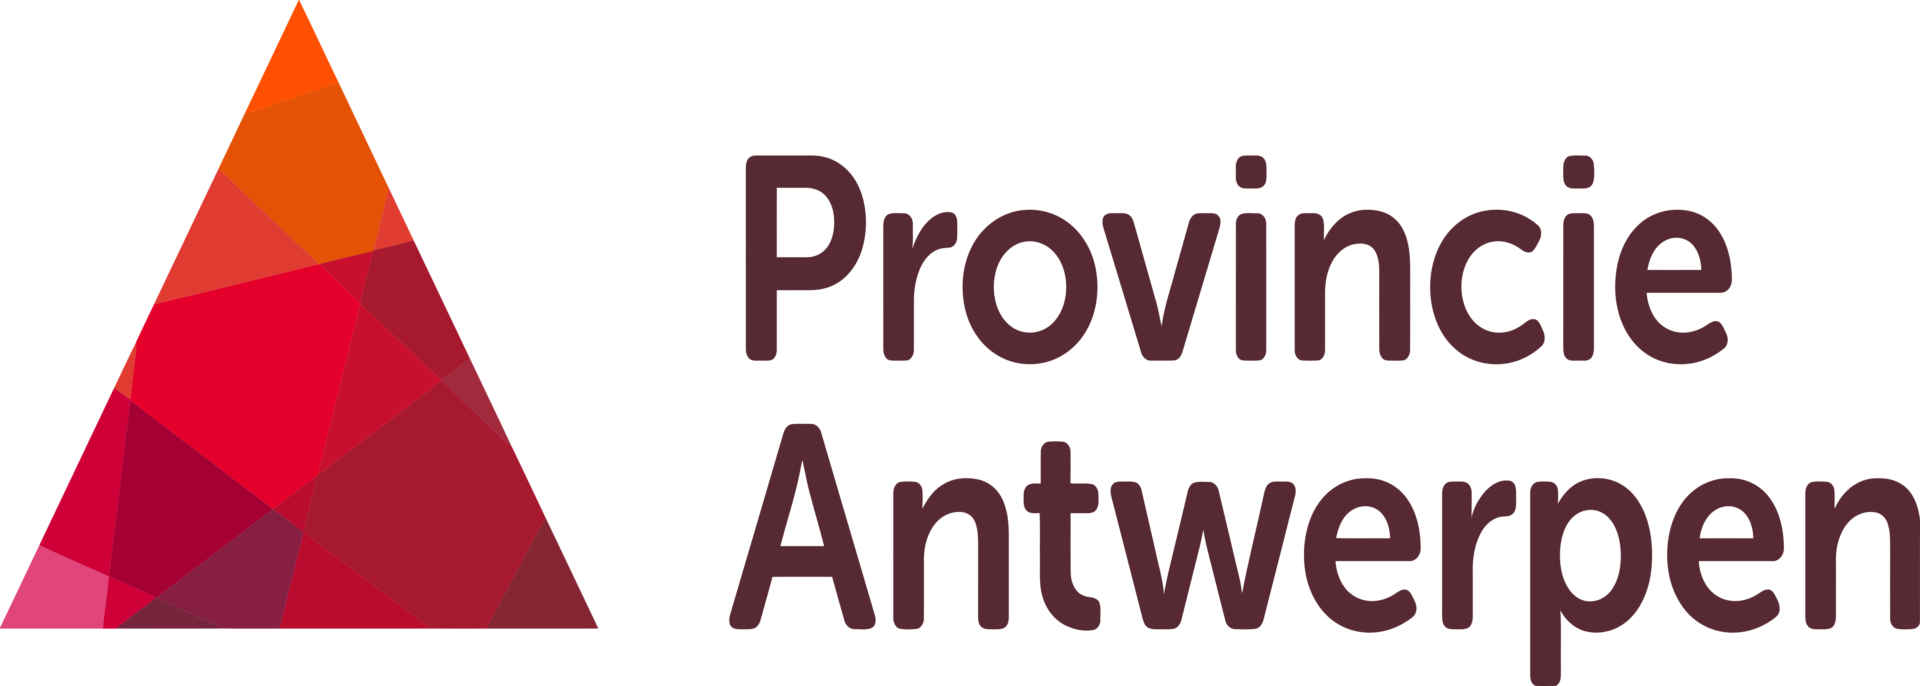 Provincie Antwerpen Logo - logo